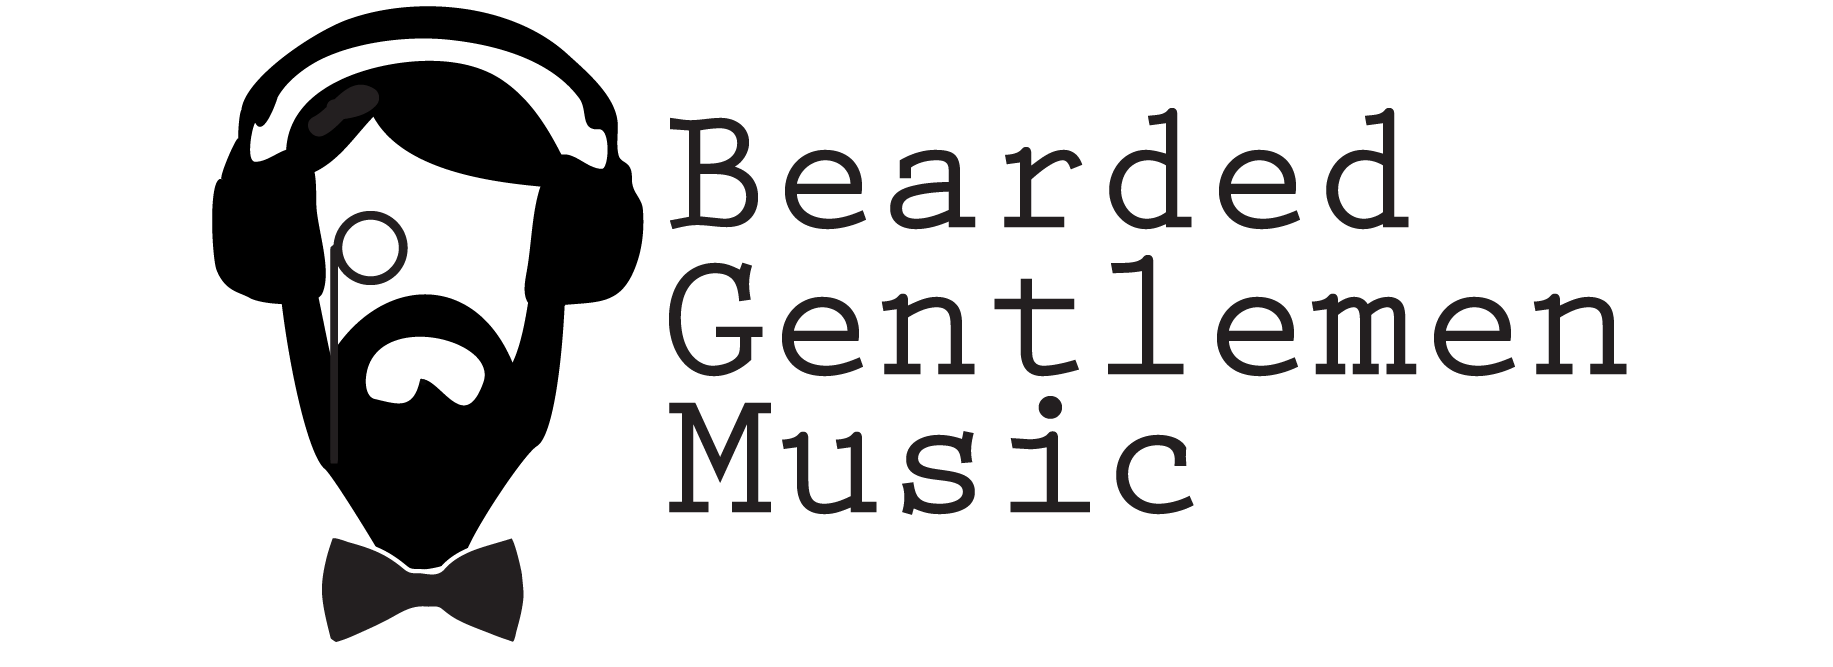 Bearded Gentlemen Music